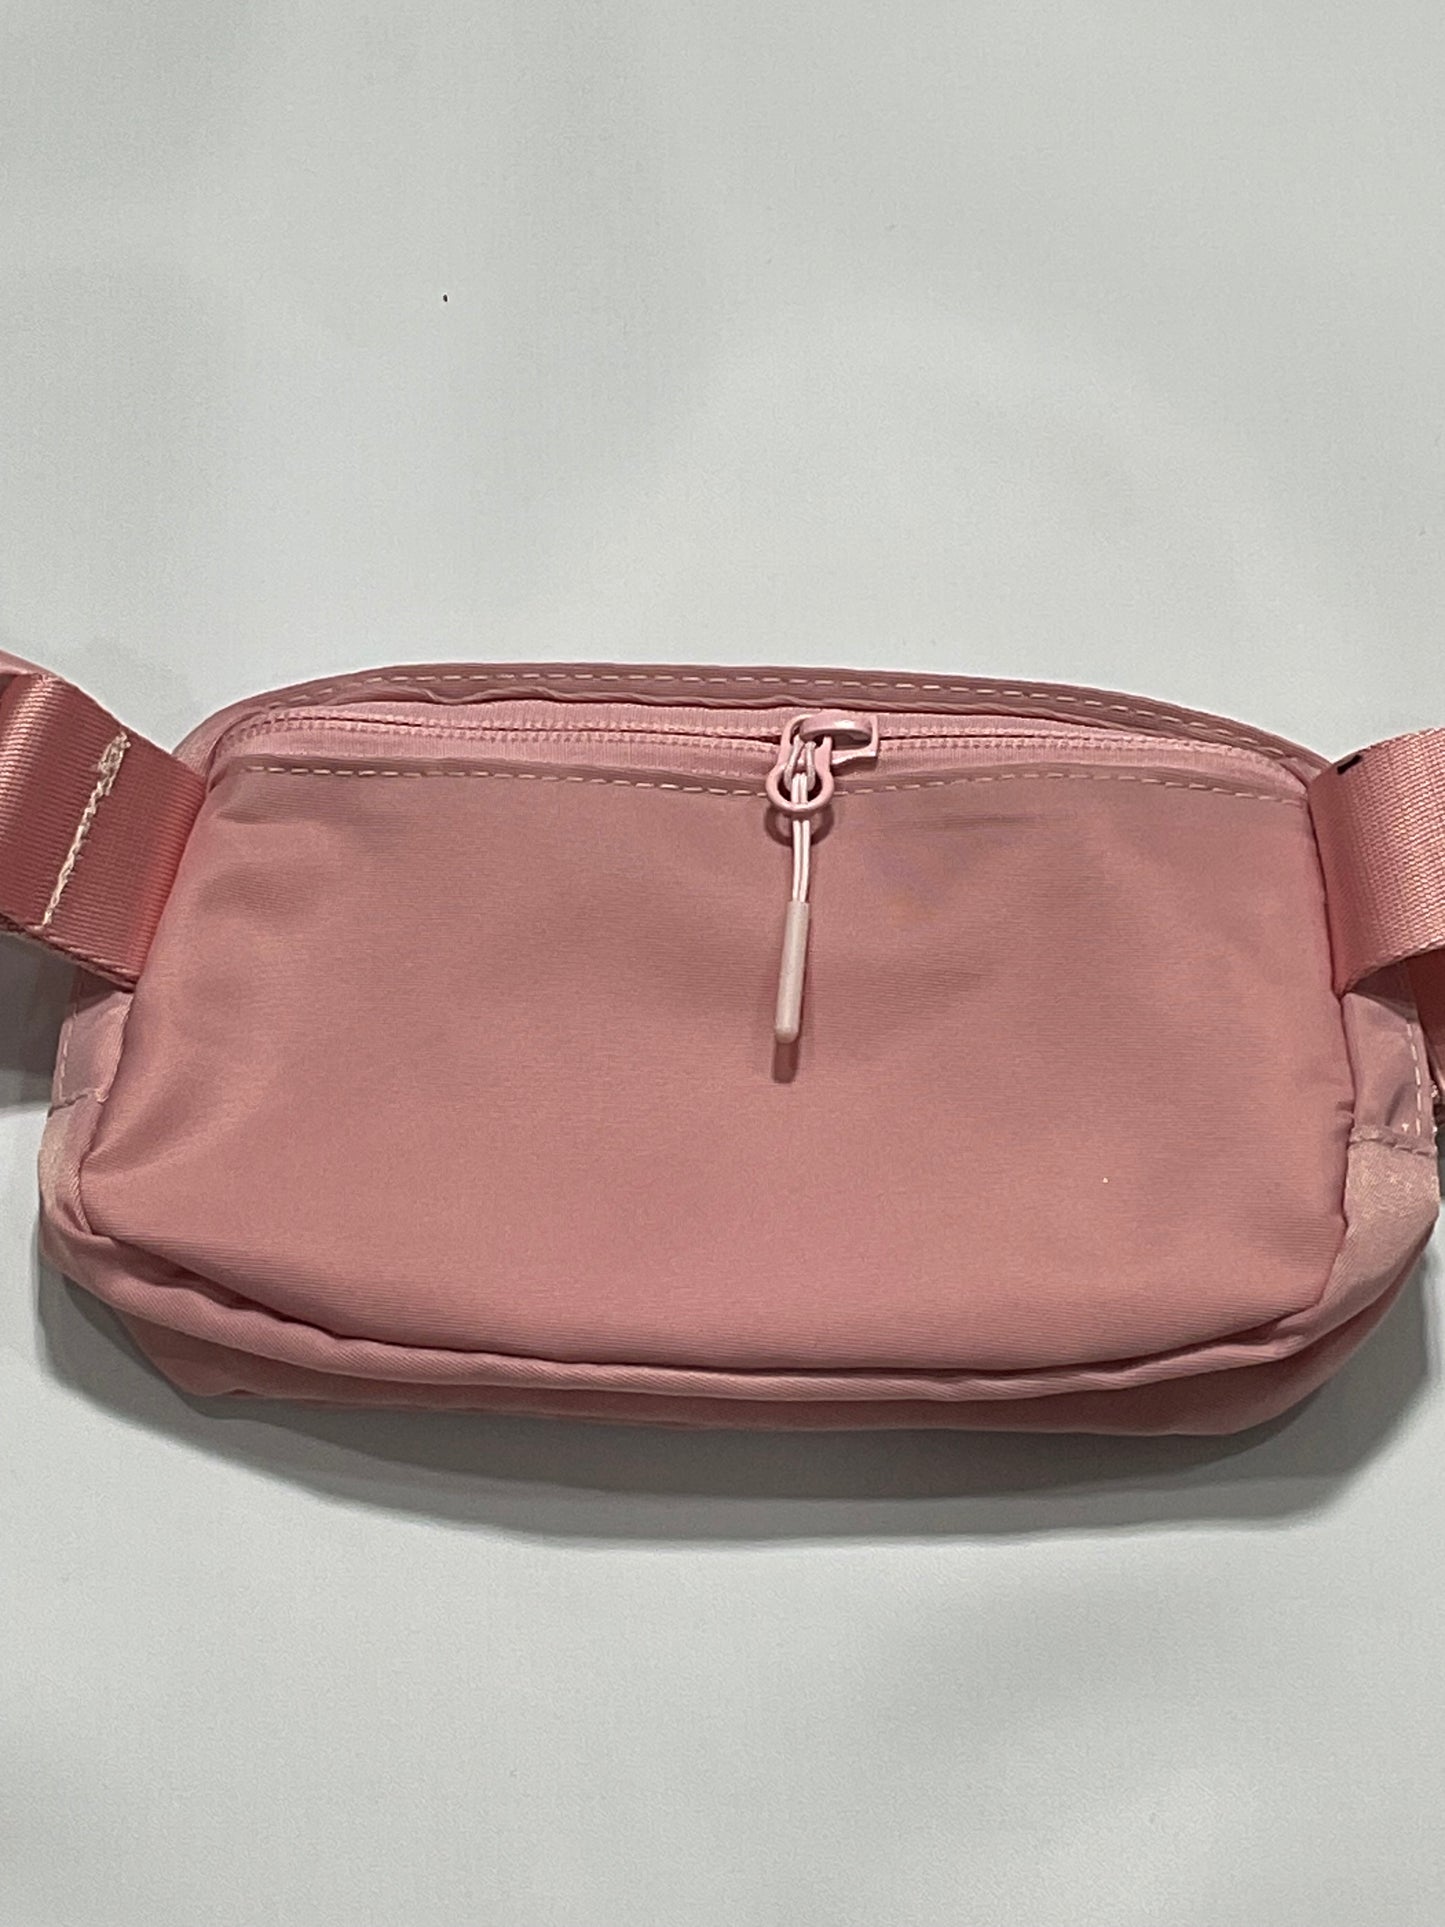 Lululemon Everywhere Belt Bag 1L - Light Pink